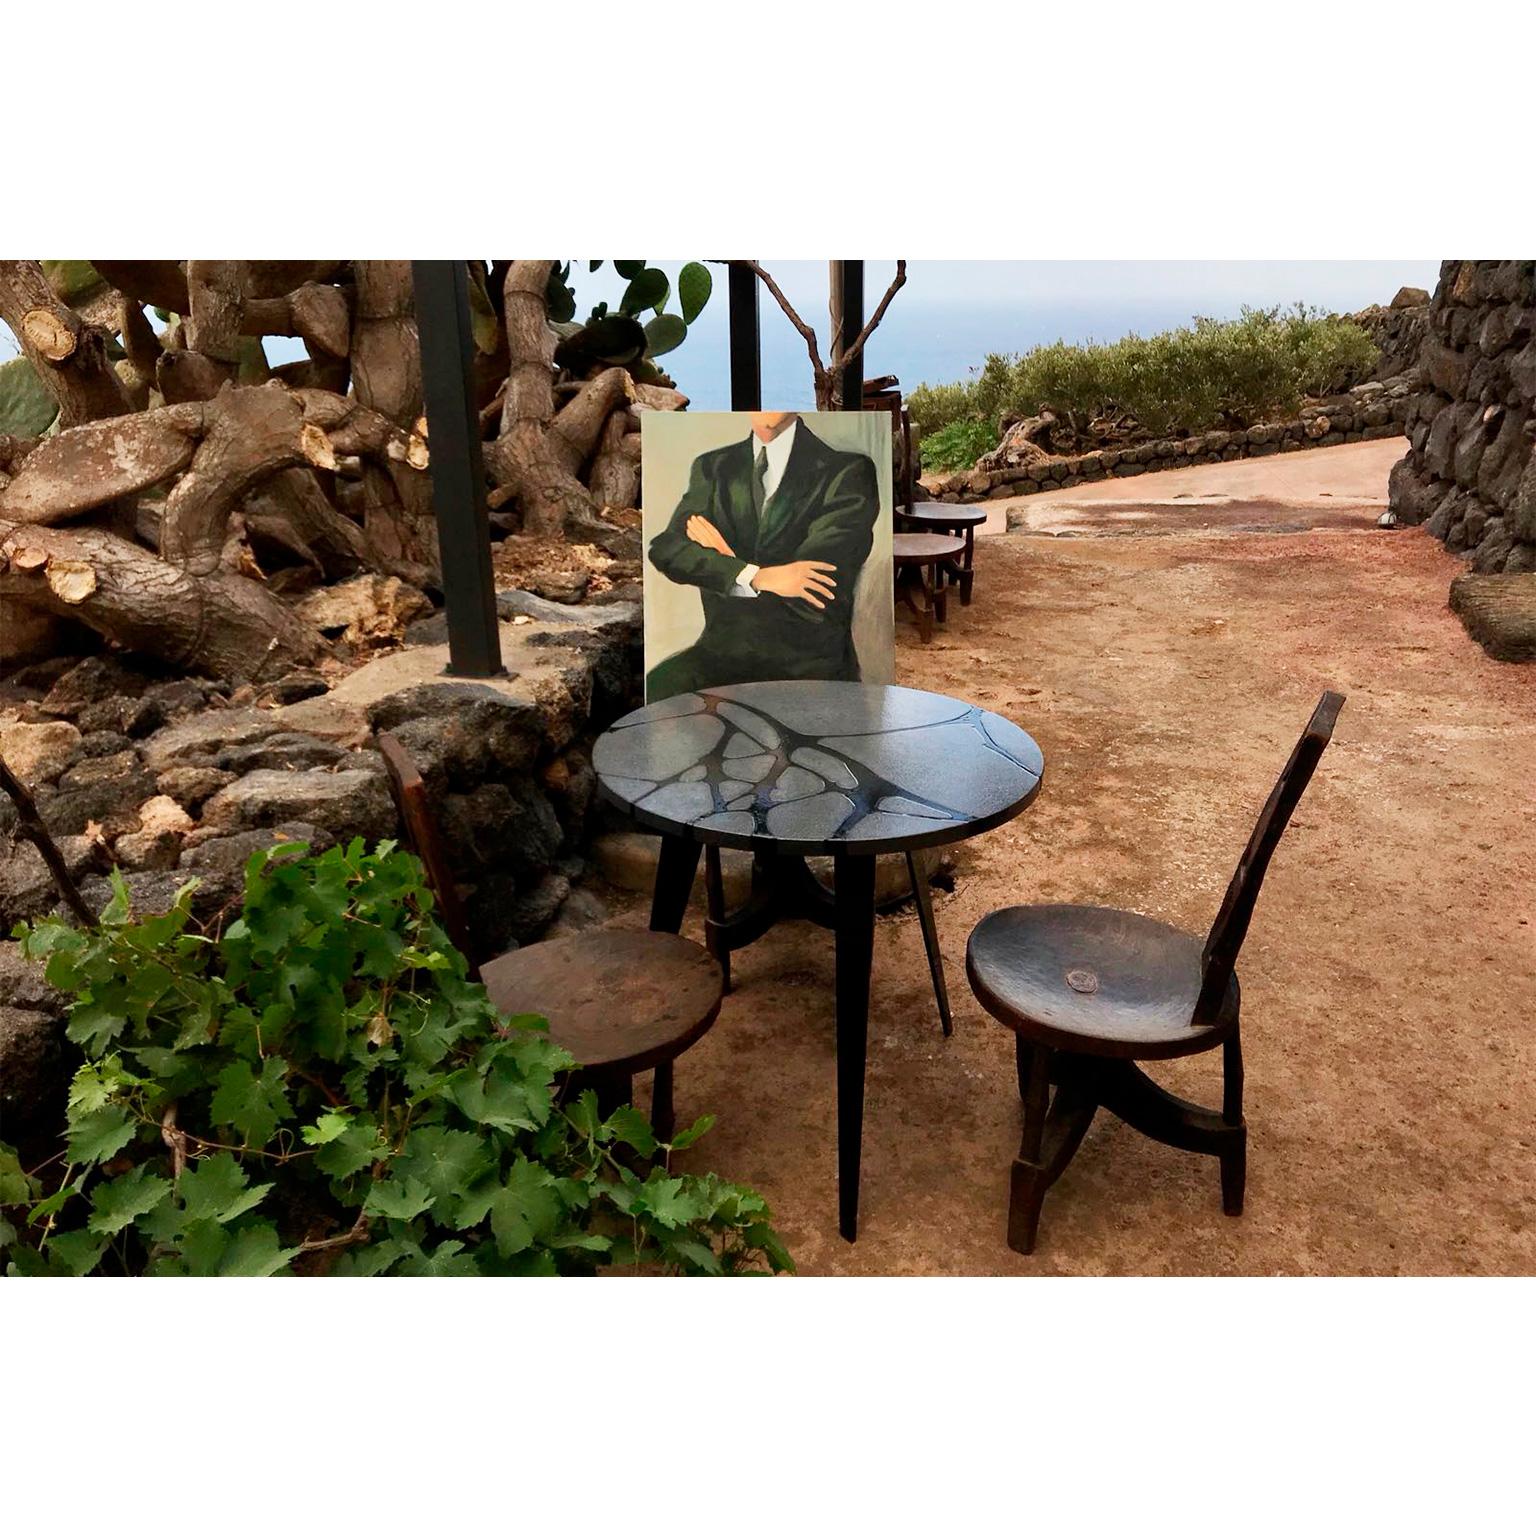 Italian Contemporary Round Outdoor Table in Lava Stone and Steel, Filodifumo For Sale